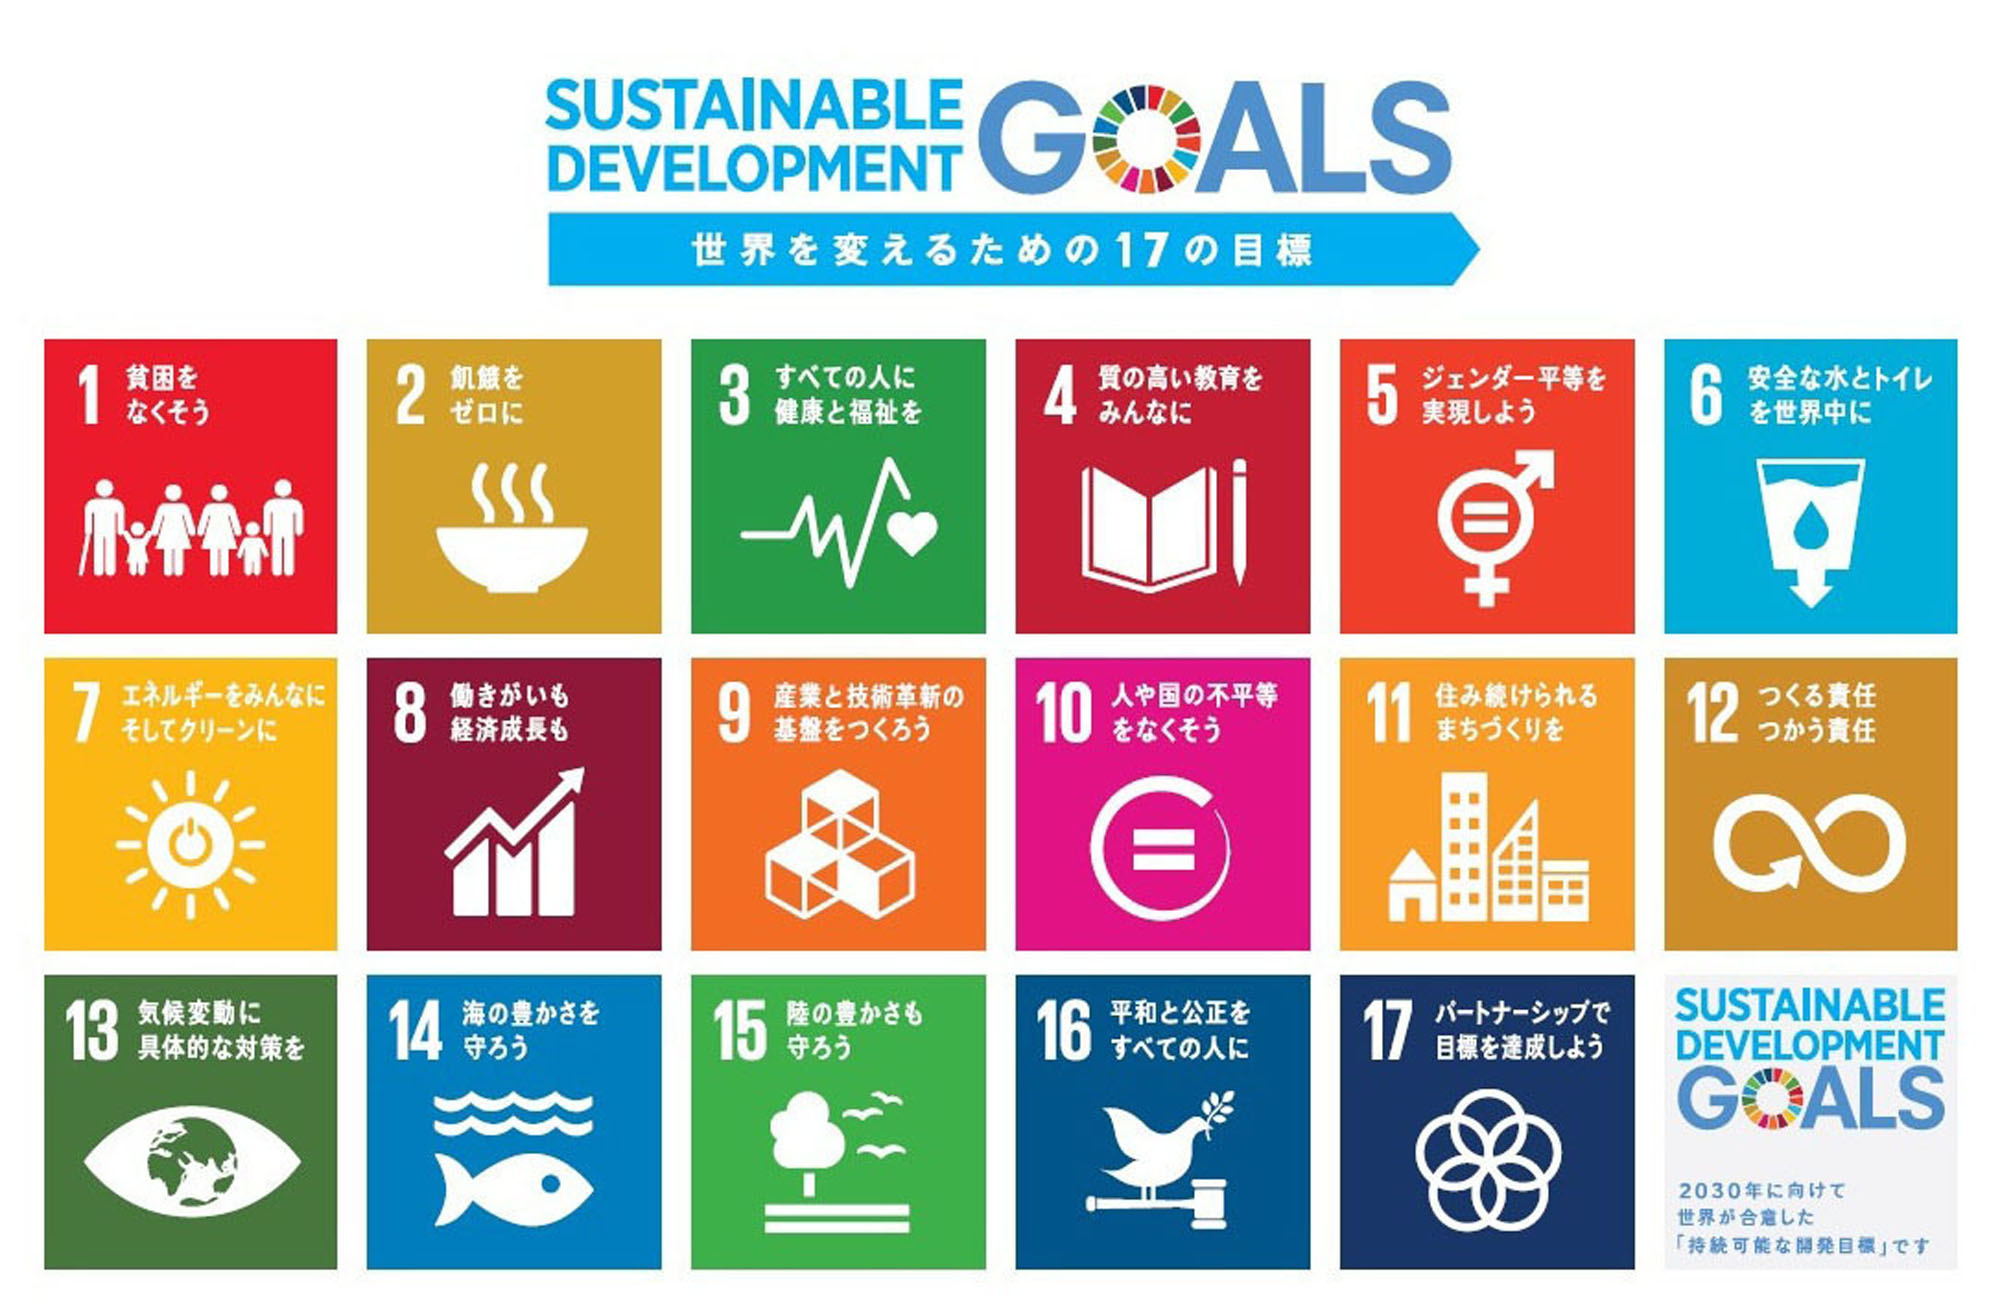 Sustainable Development Goals (SDG) for sustainability.